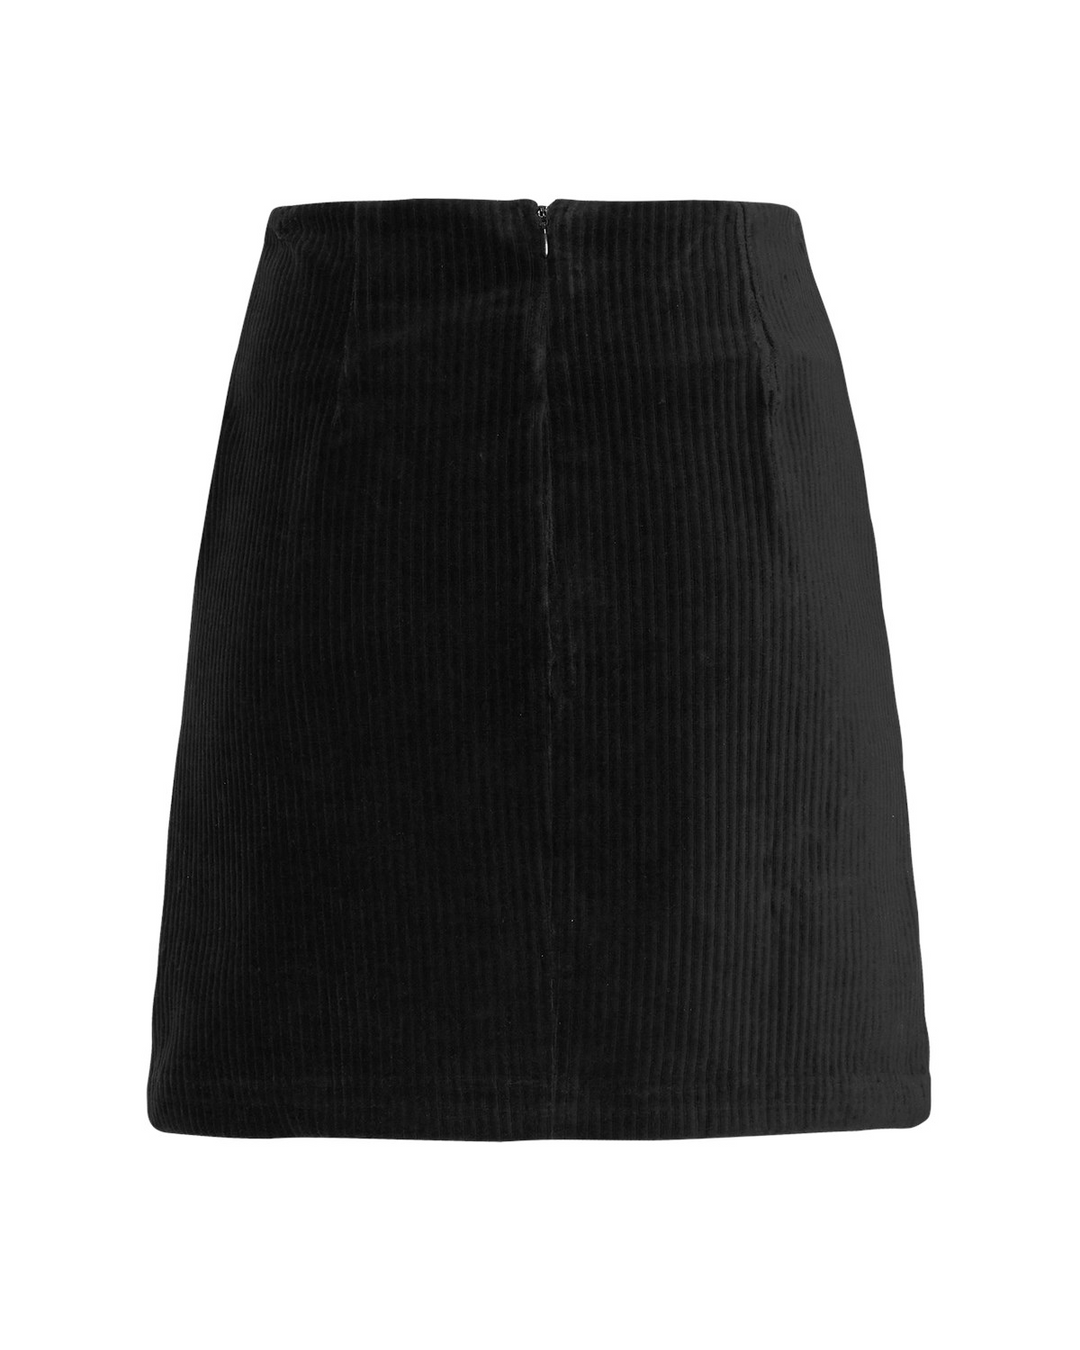 Floriana HW Skirt